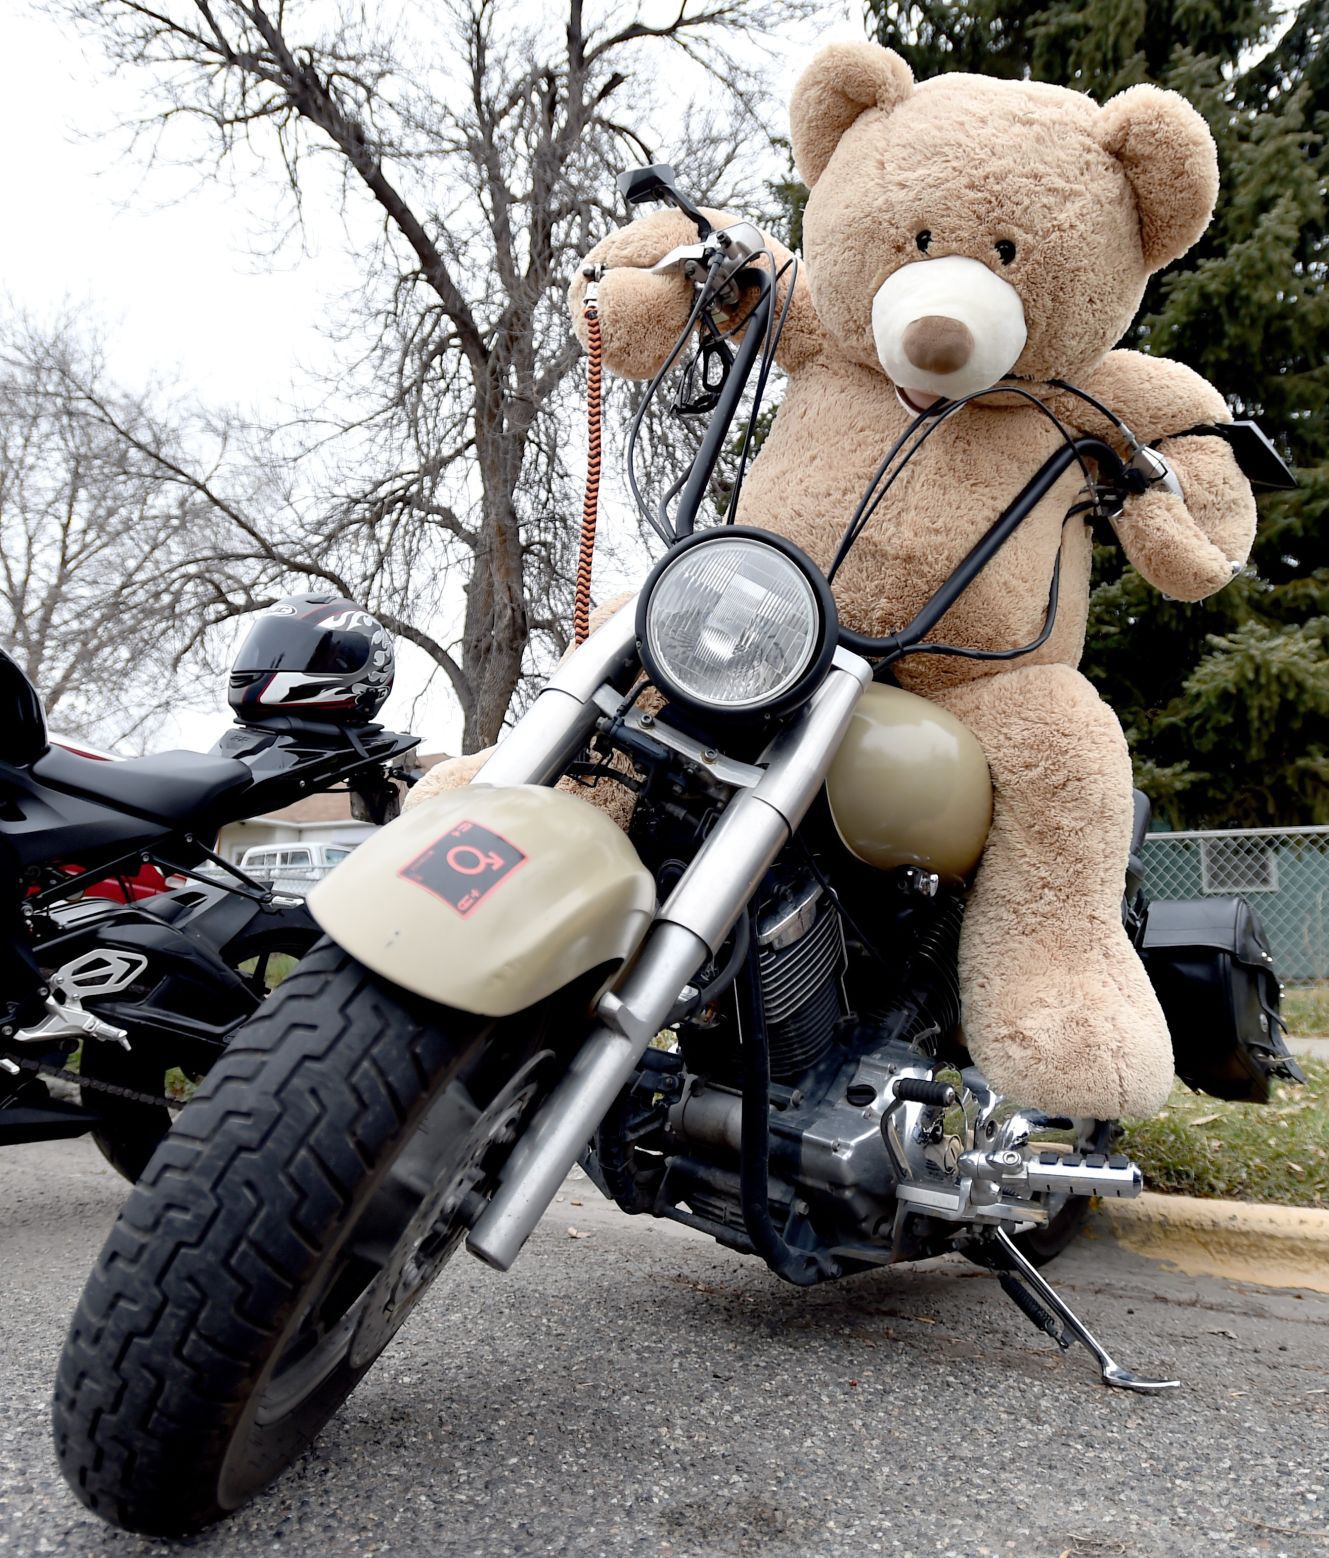 teddy bear on a motorcycle